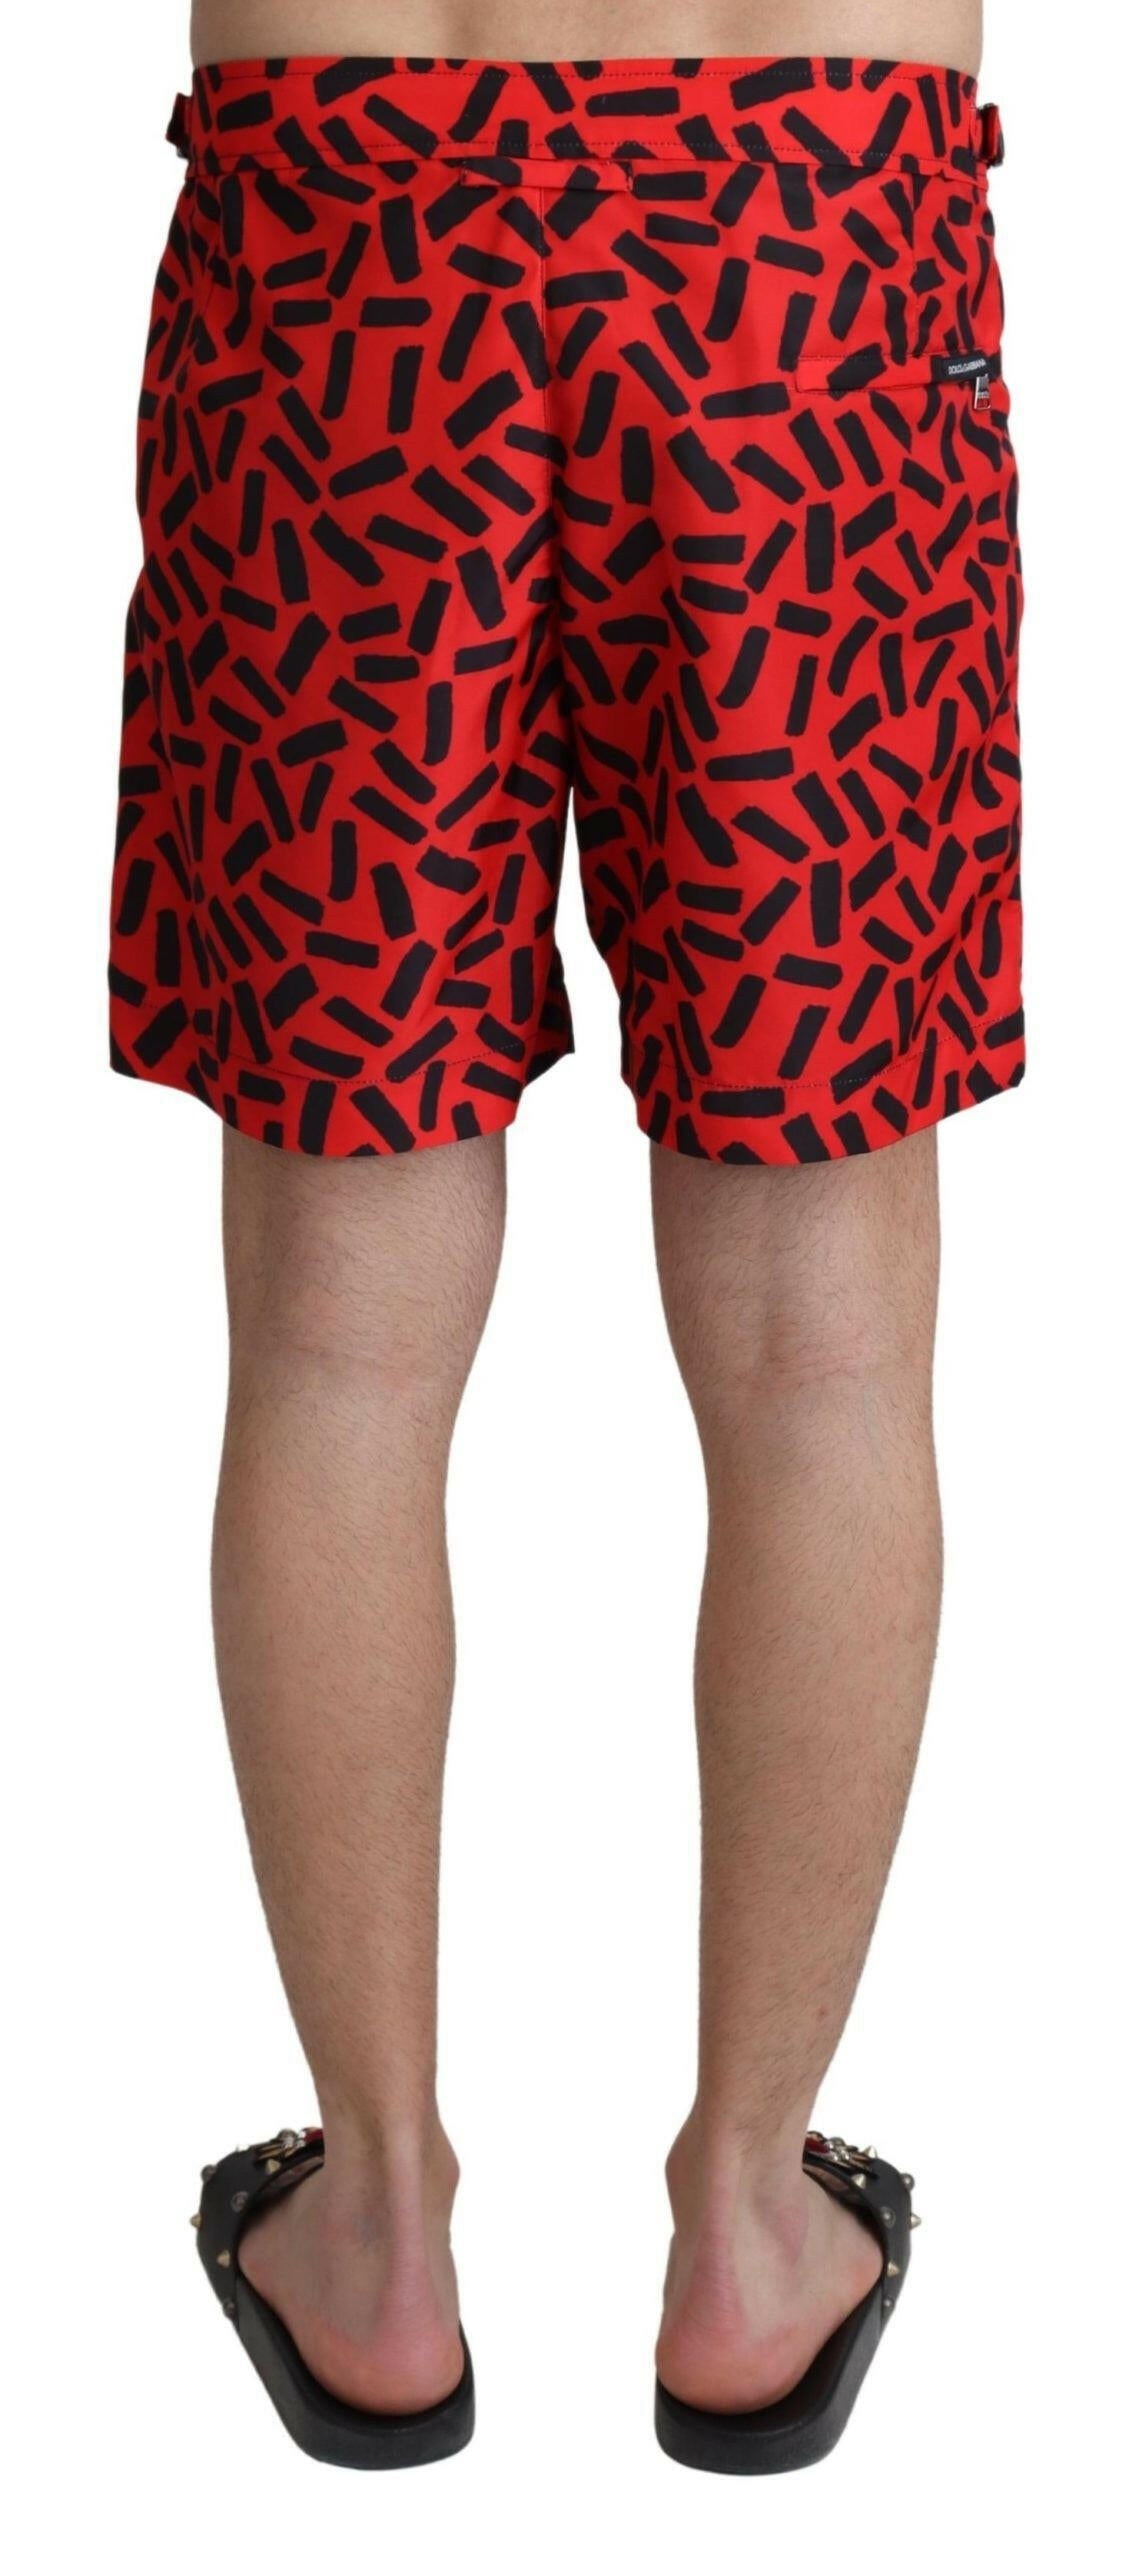 Dolce & Gabbana Red Patterned Beachwear Shorts Swimwear - GENUINE AUTHENTIC BRAND LLC  